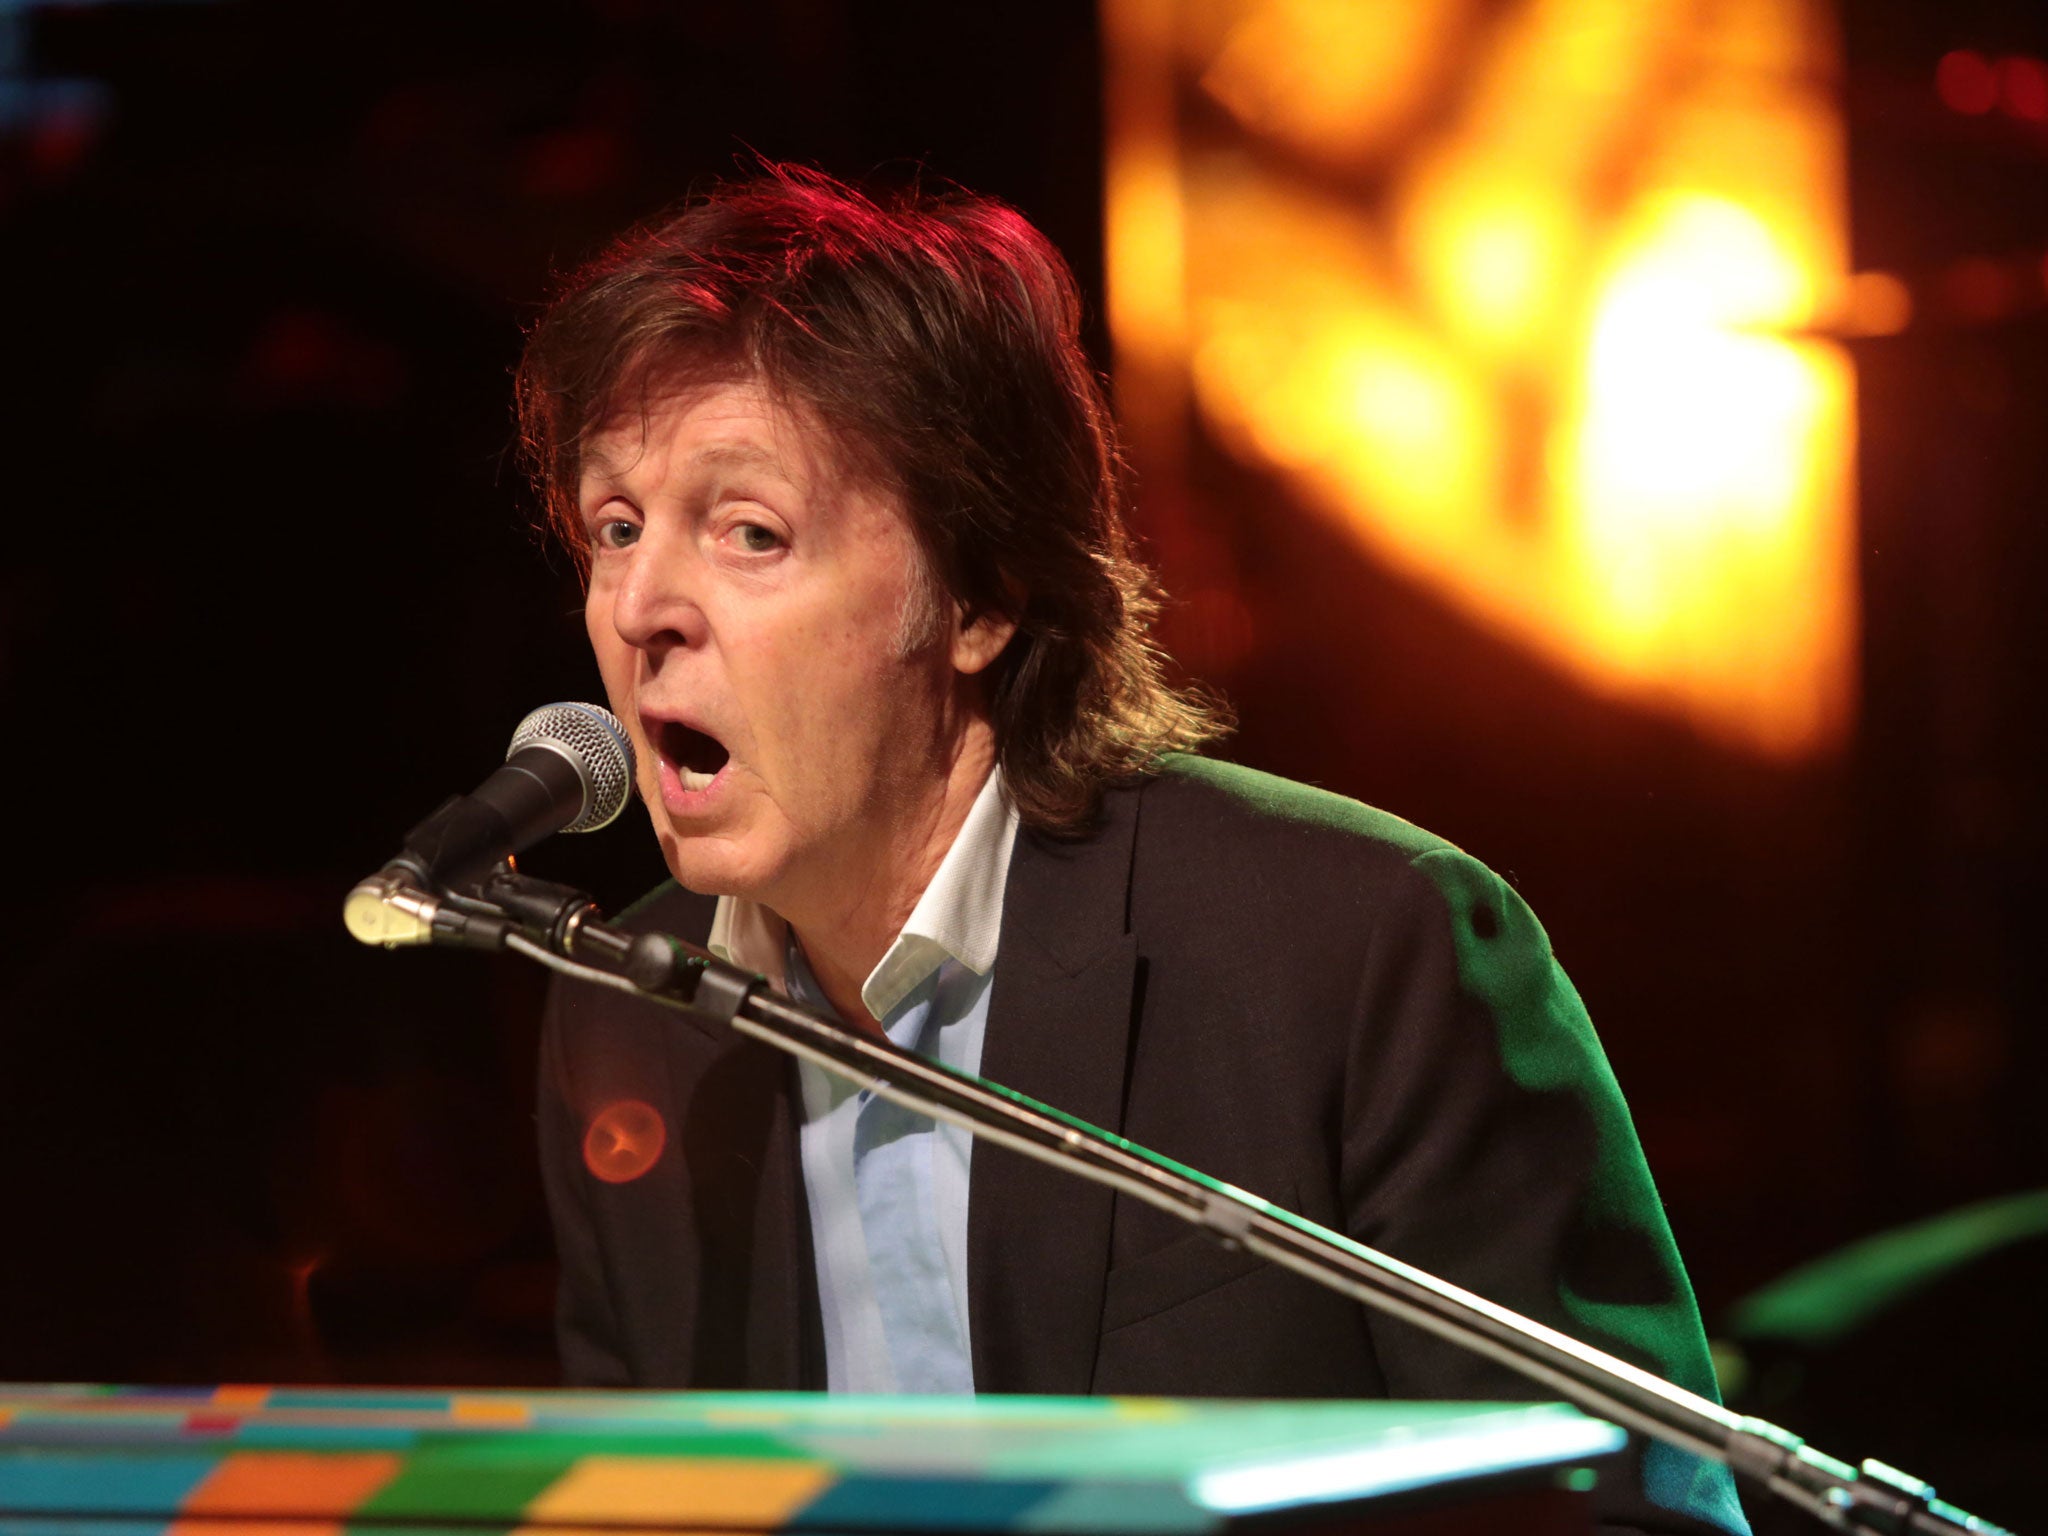 Sir Paul McCartney performing live at Maida Vale for BBC Radio 6